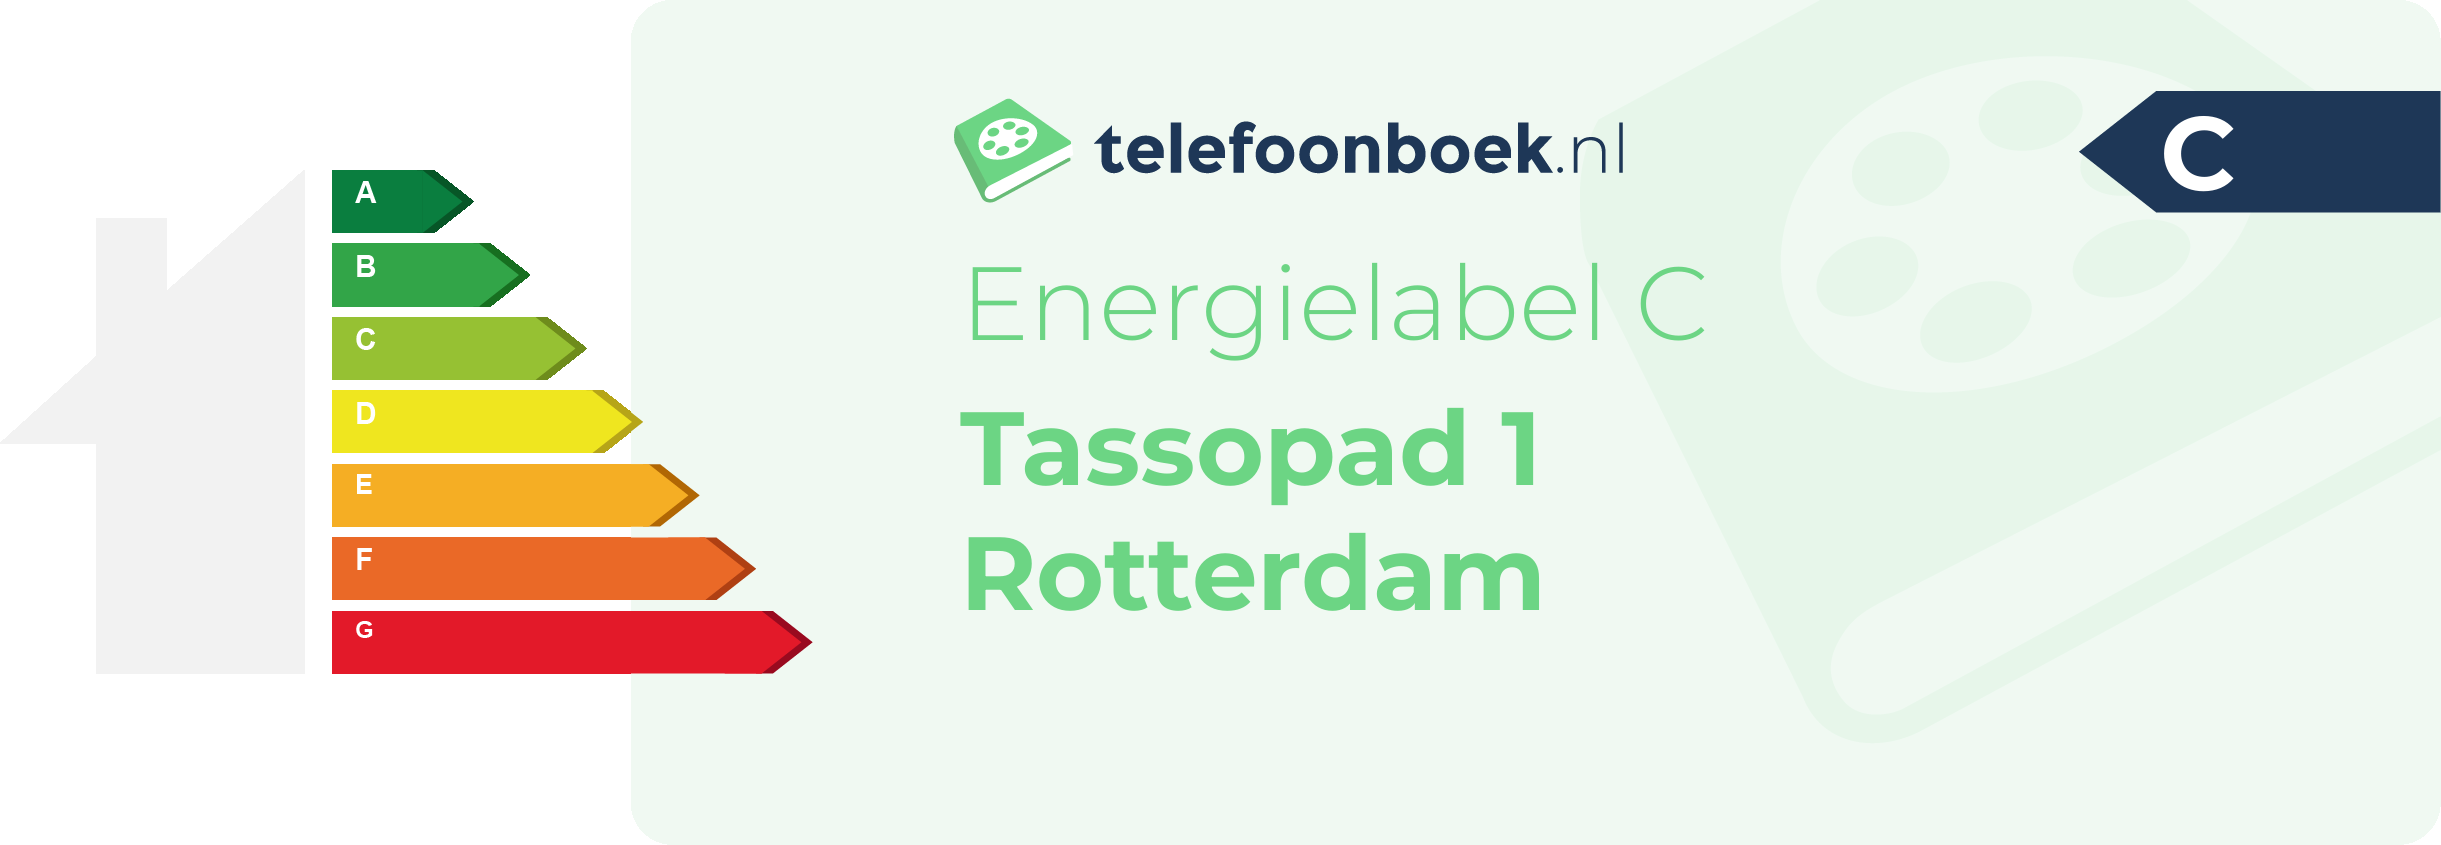 Energielabel Tassopad 1 Rotterdam